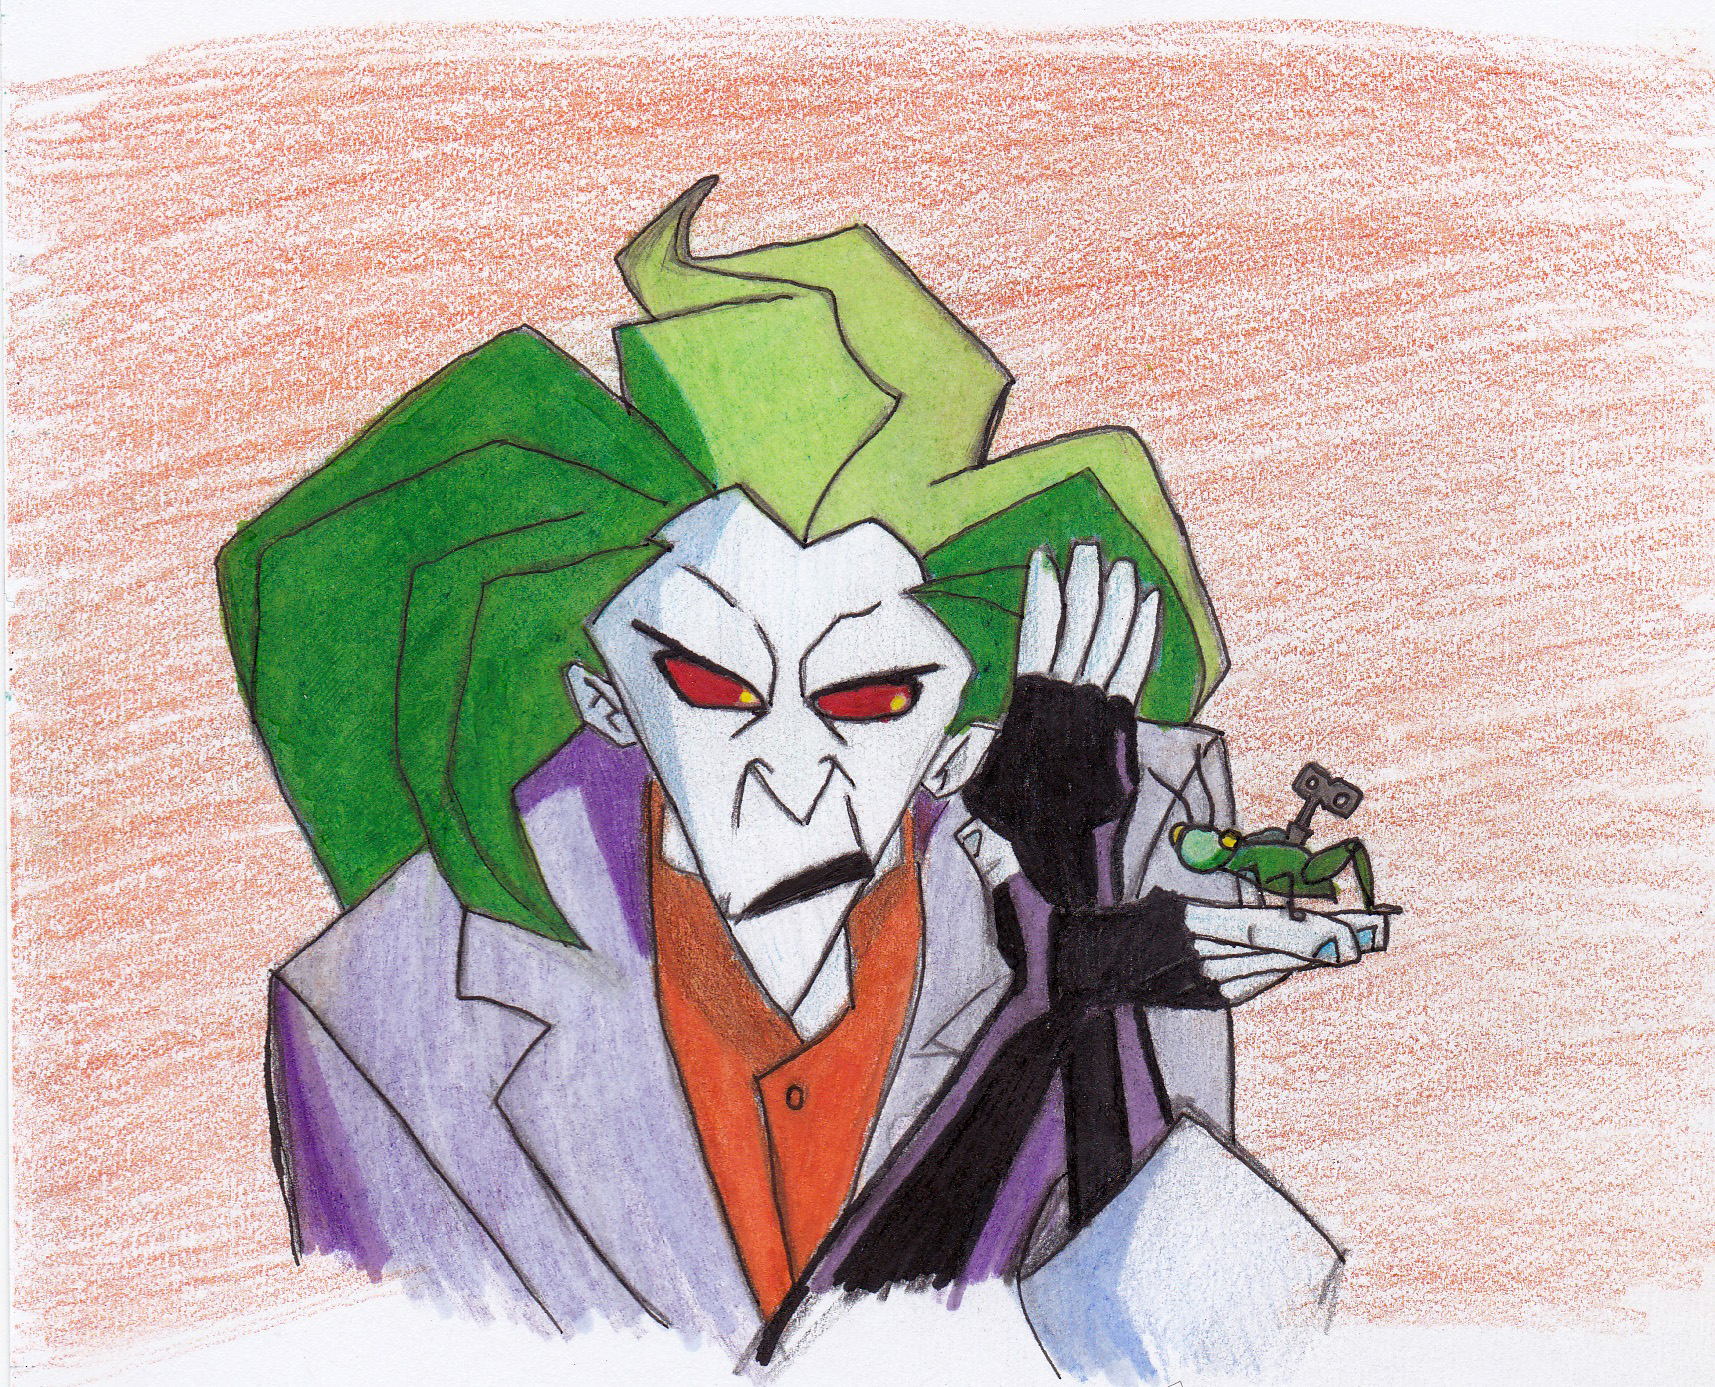 The Joker from The Batman animated series by DisturbedJokerFan on DeviantArt